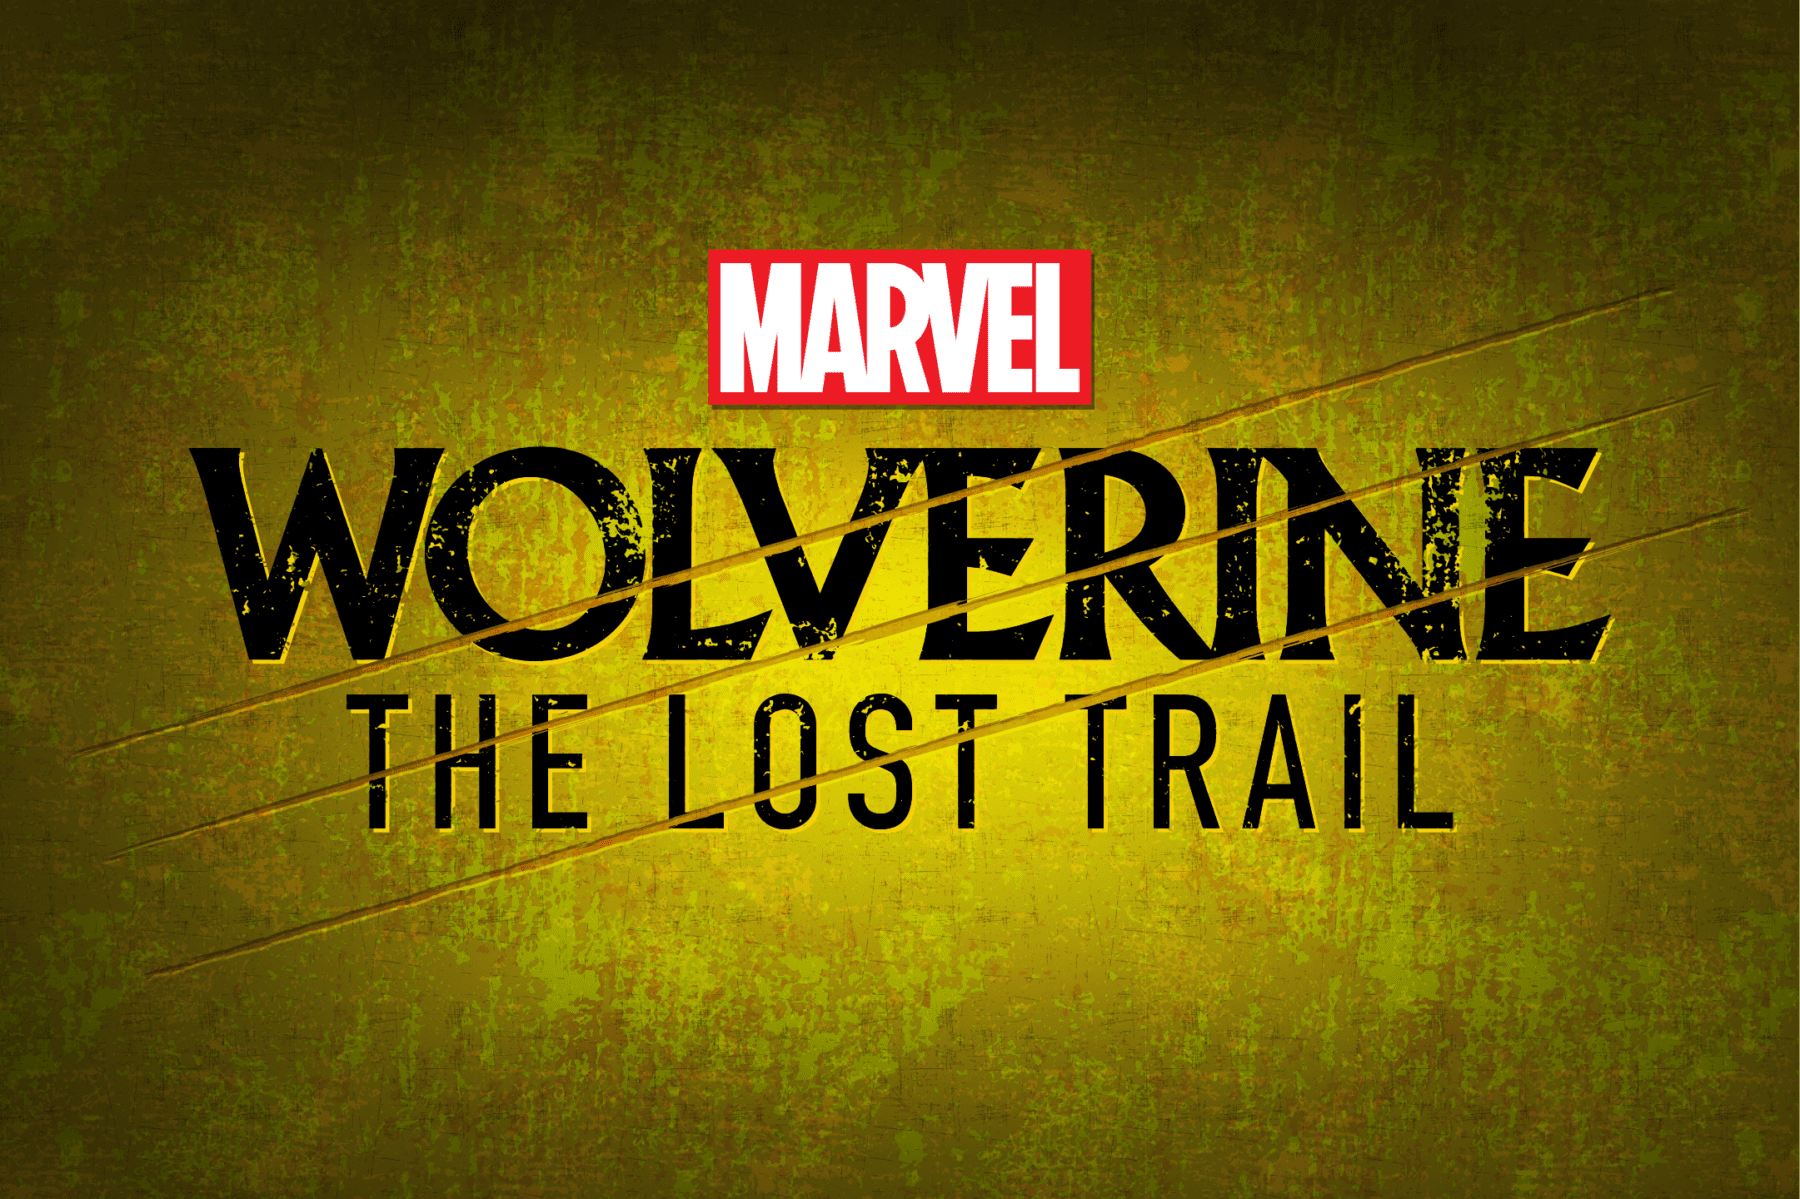 Marvel y Stitcher anuncian Wolverine: The Lost Trail